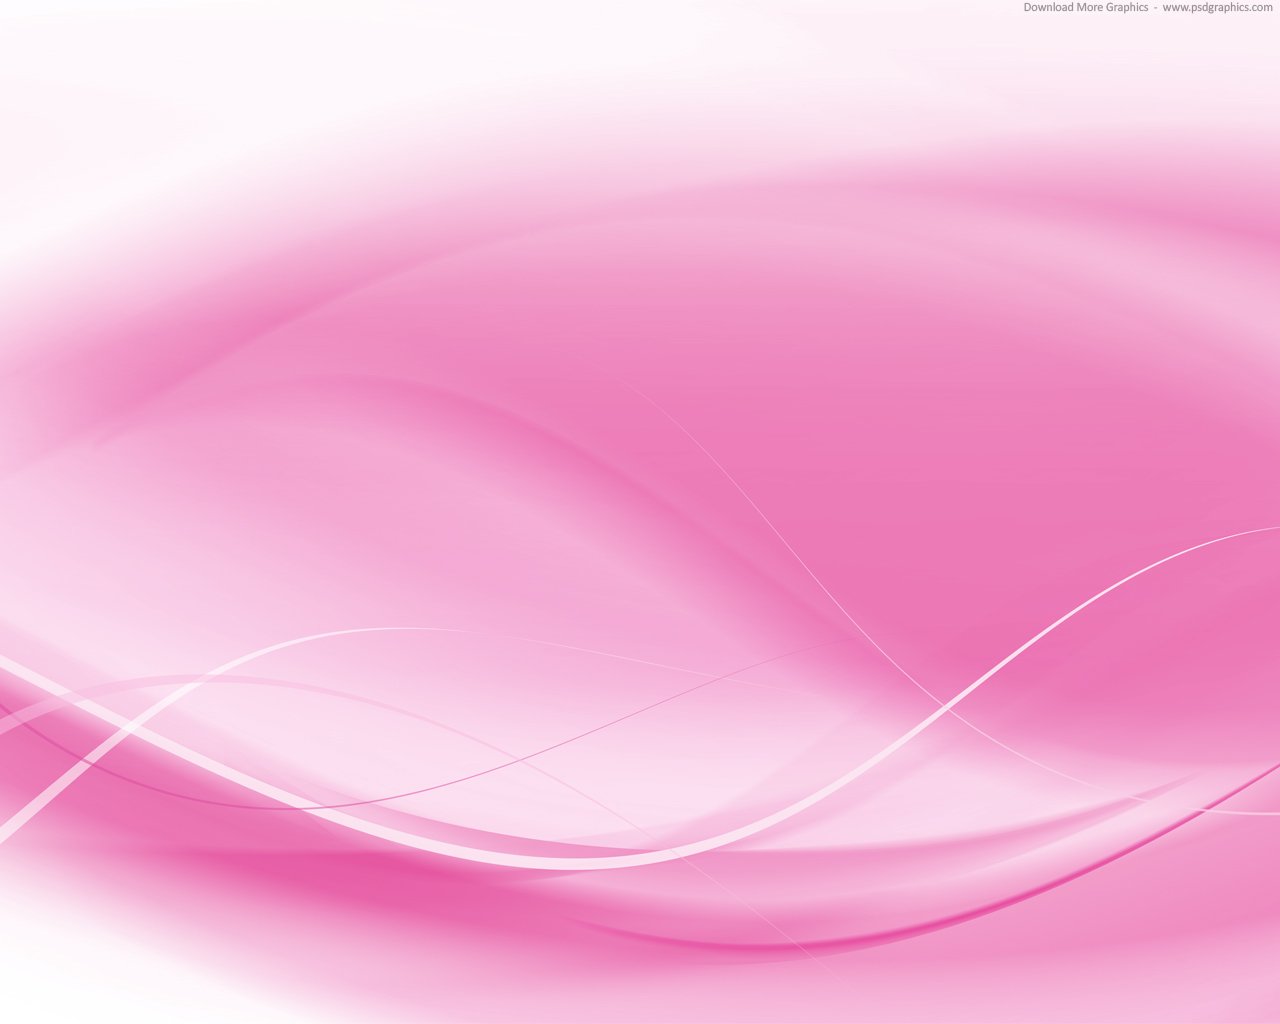 soft-pink-background.jpg (1280×1024)